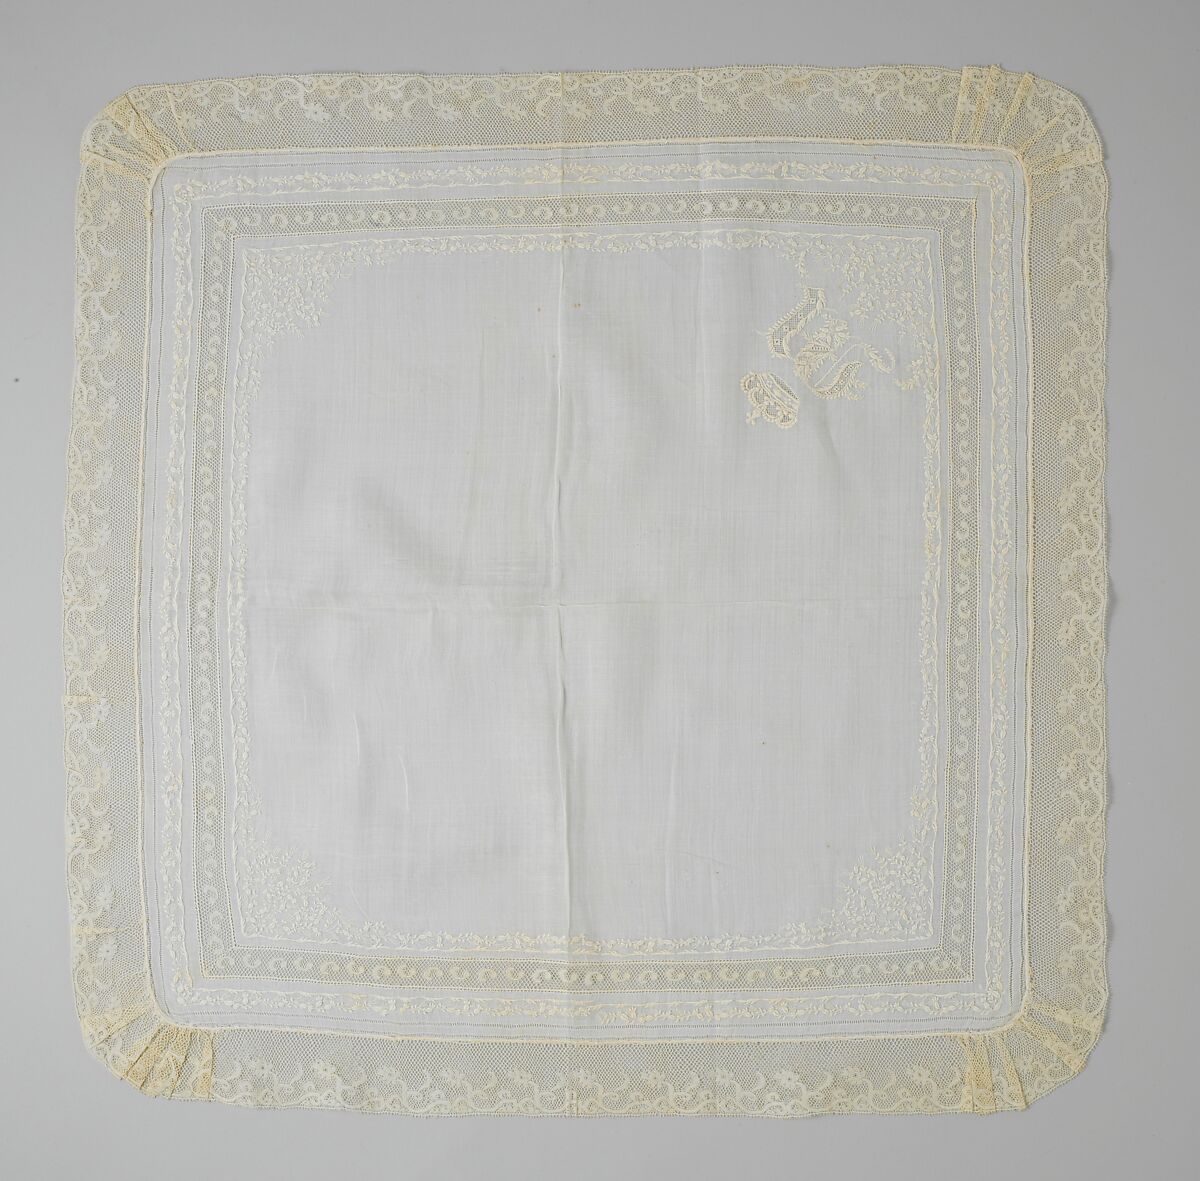 Handkerchief, silk on linen, French or Swiss 